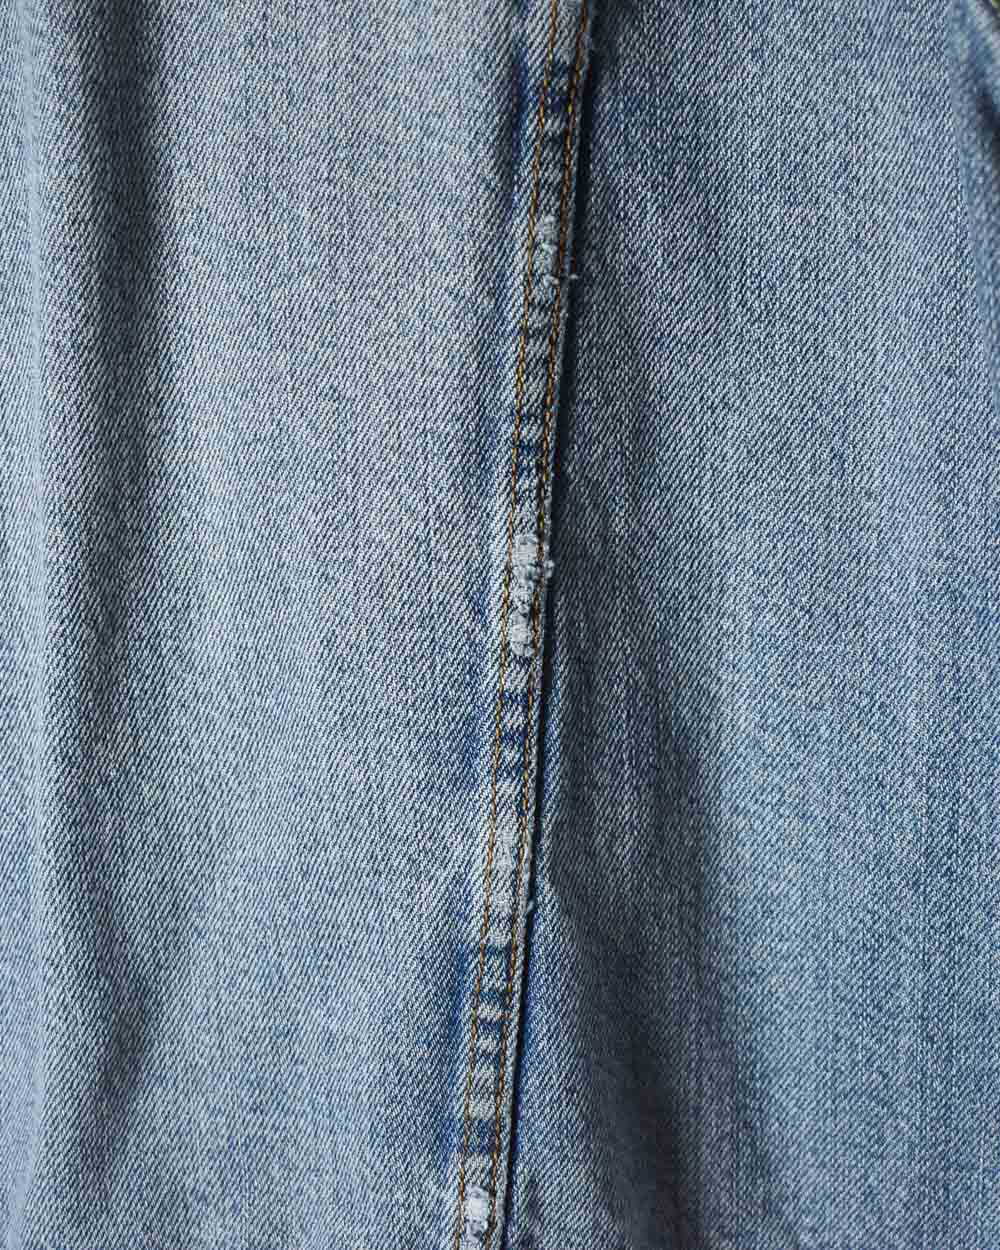 Blue Levi's Signature Denim Jacket - Large Women's